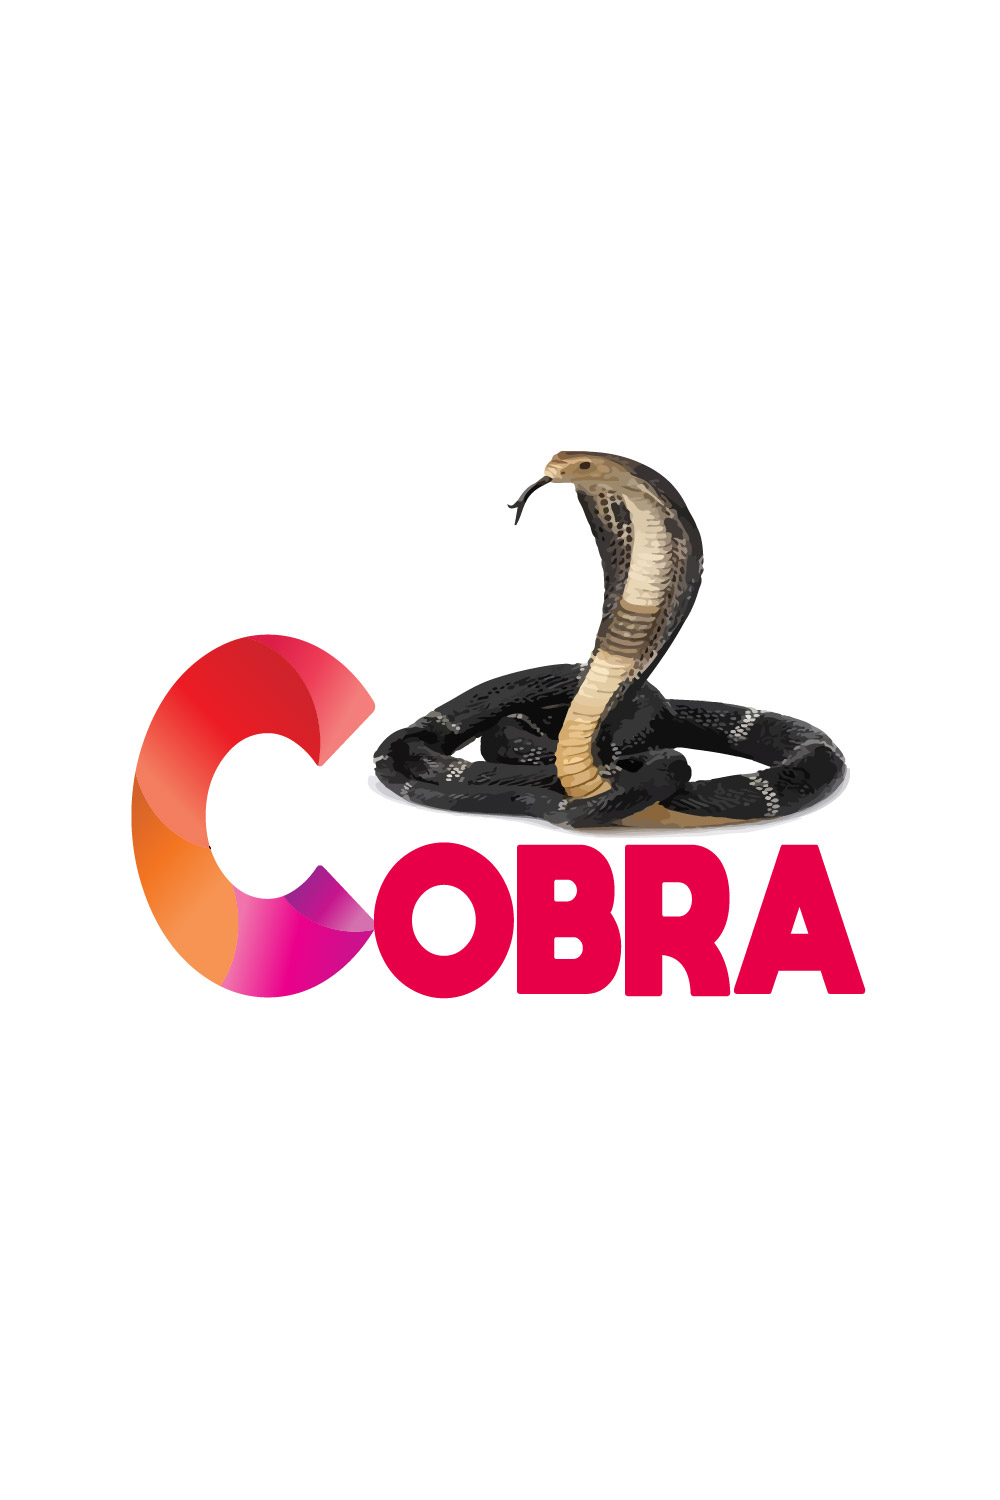 cobra pinterest preview image.